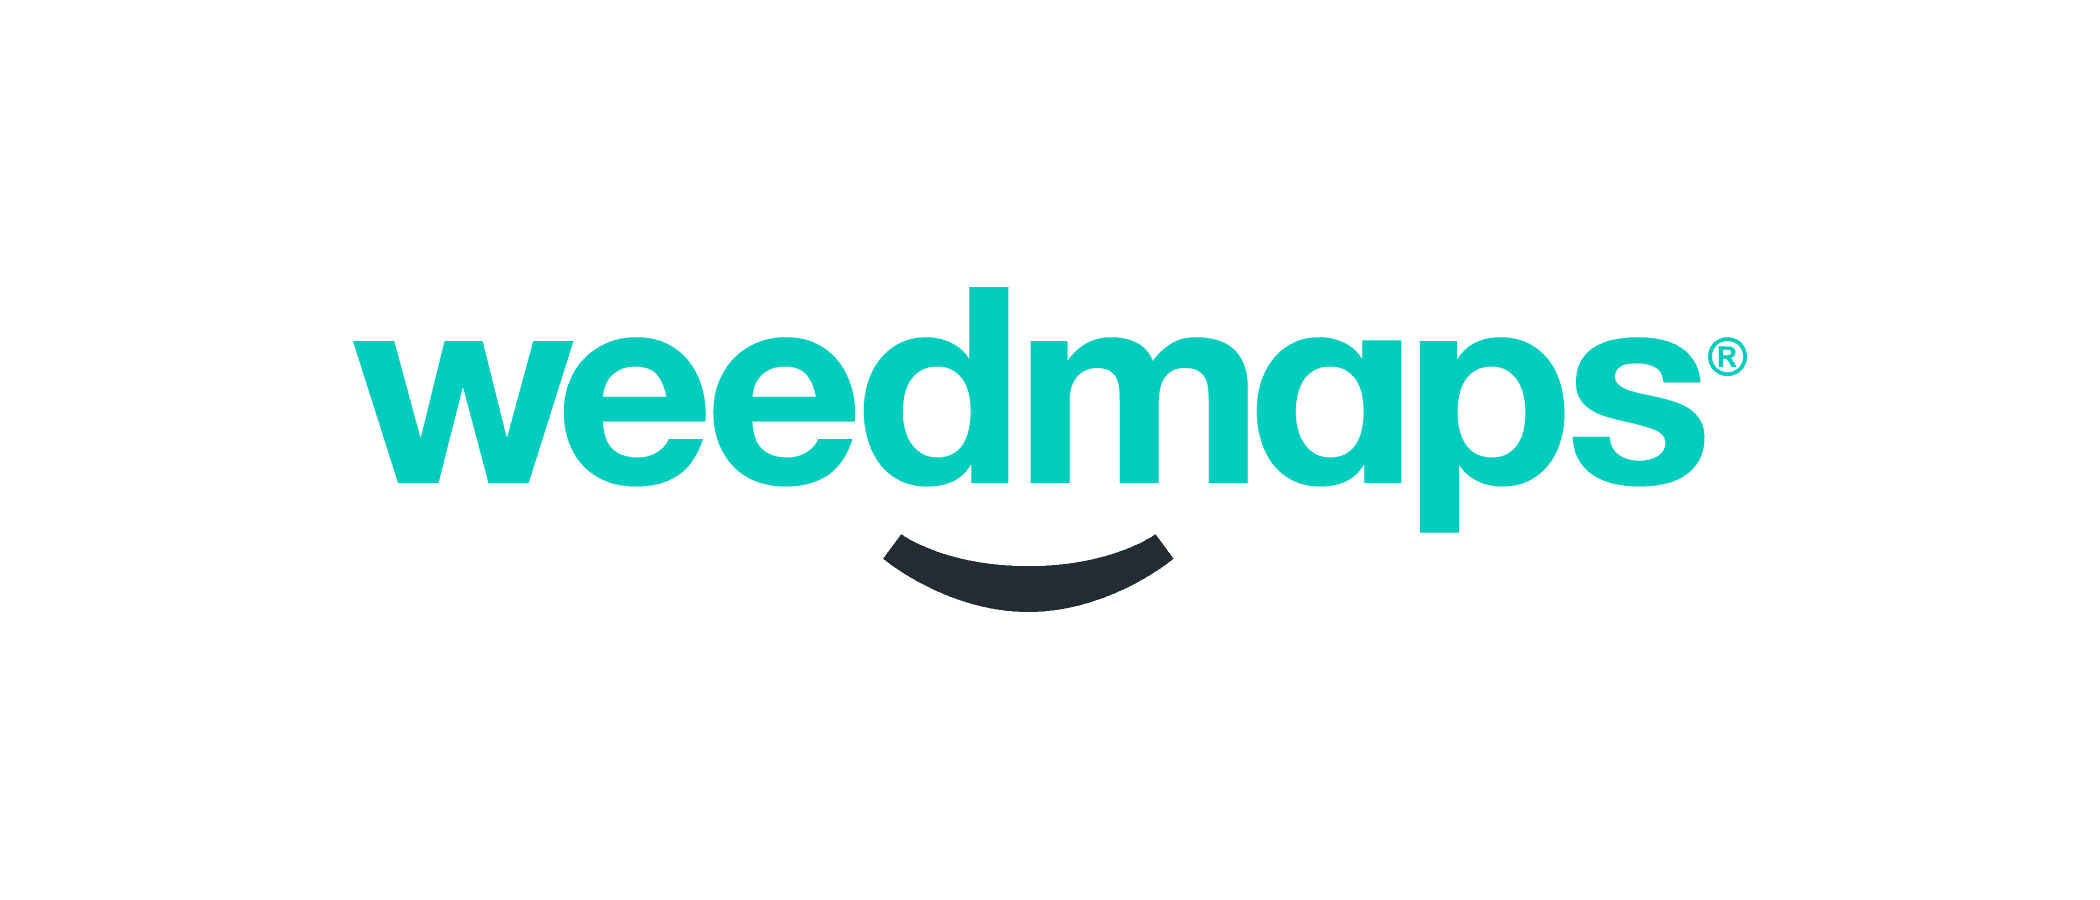 Weedmaps_Logo_2020_TransparentBgrd